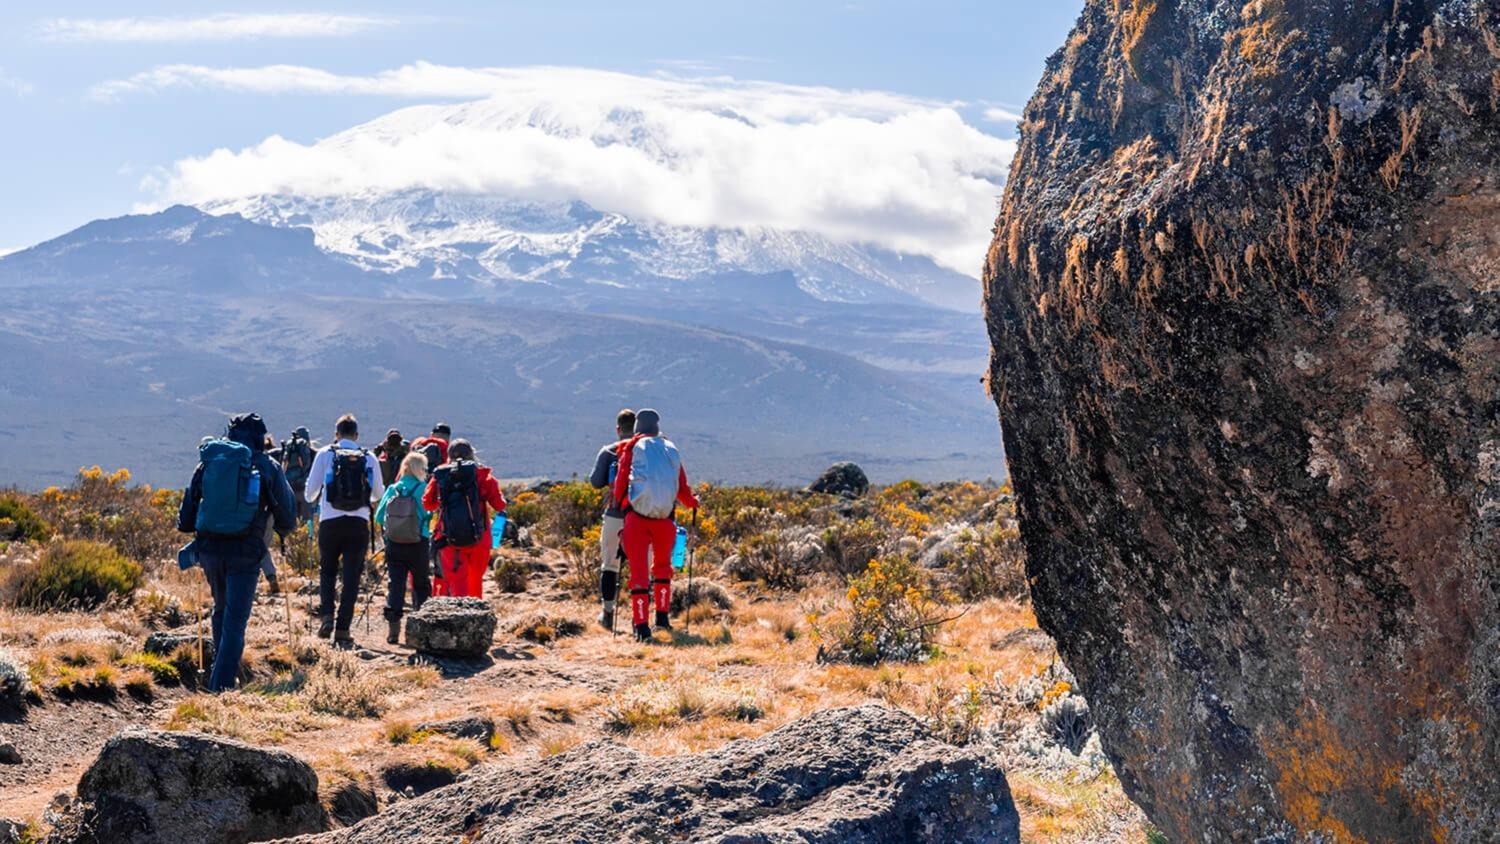 Kilimanjaro climbing 5 days Marangu route